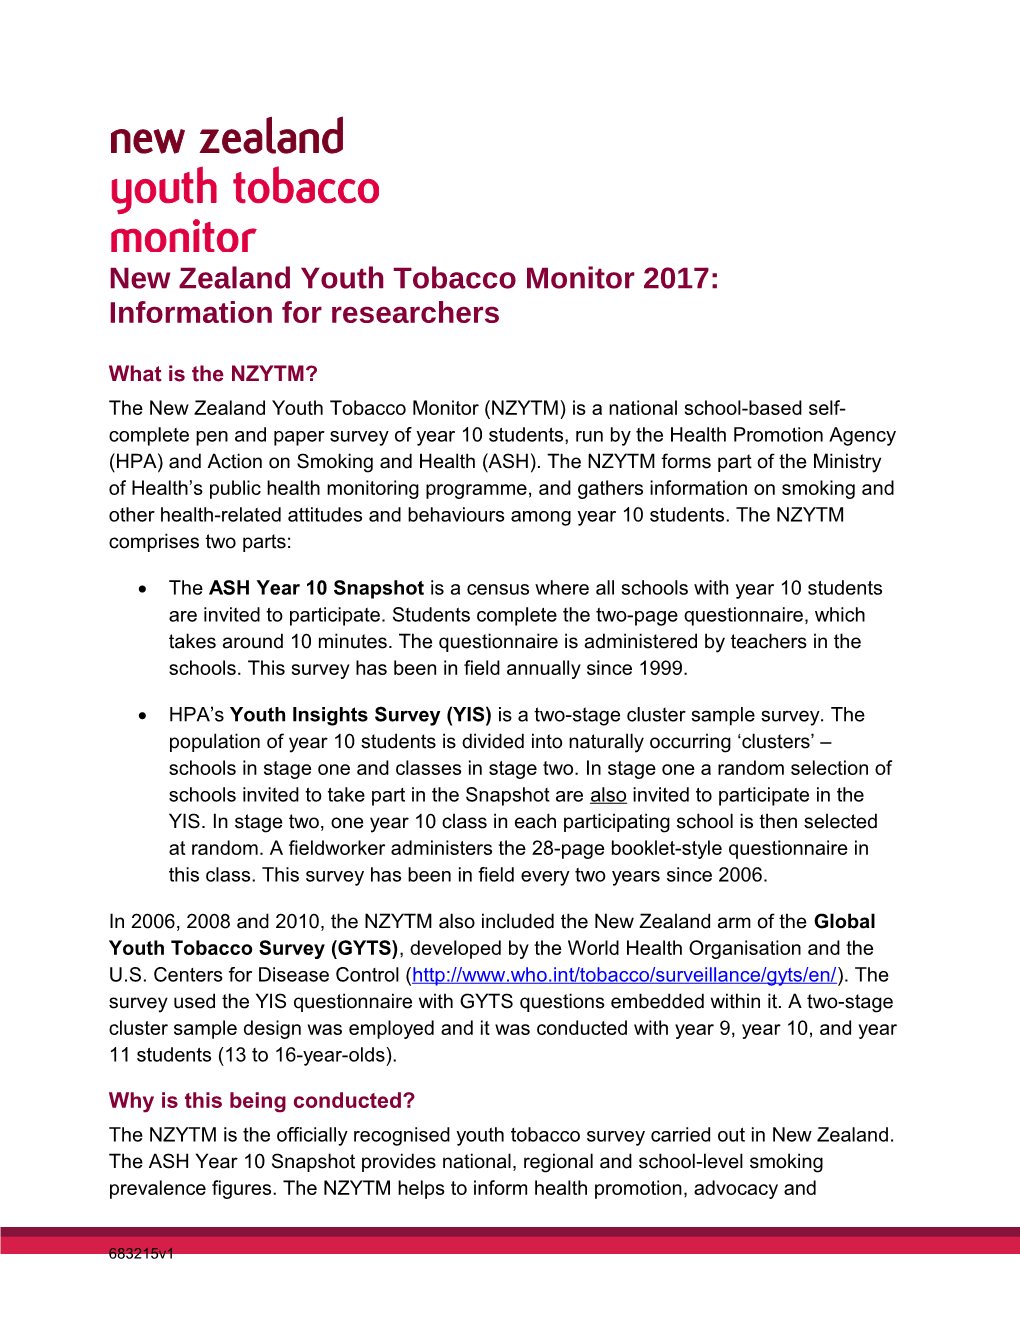 New Zealand Youth Tobacco Monitor 2012